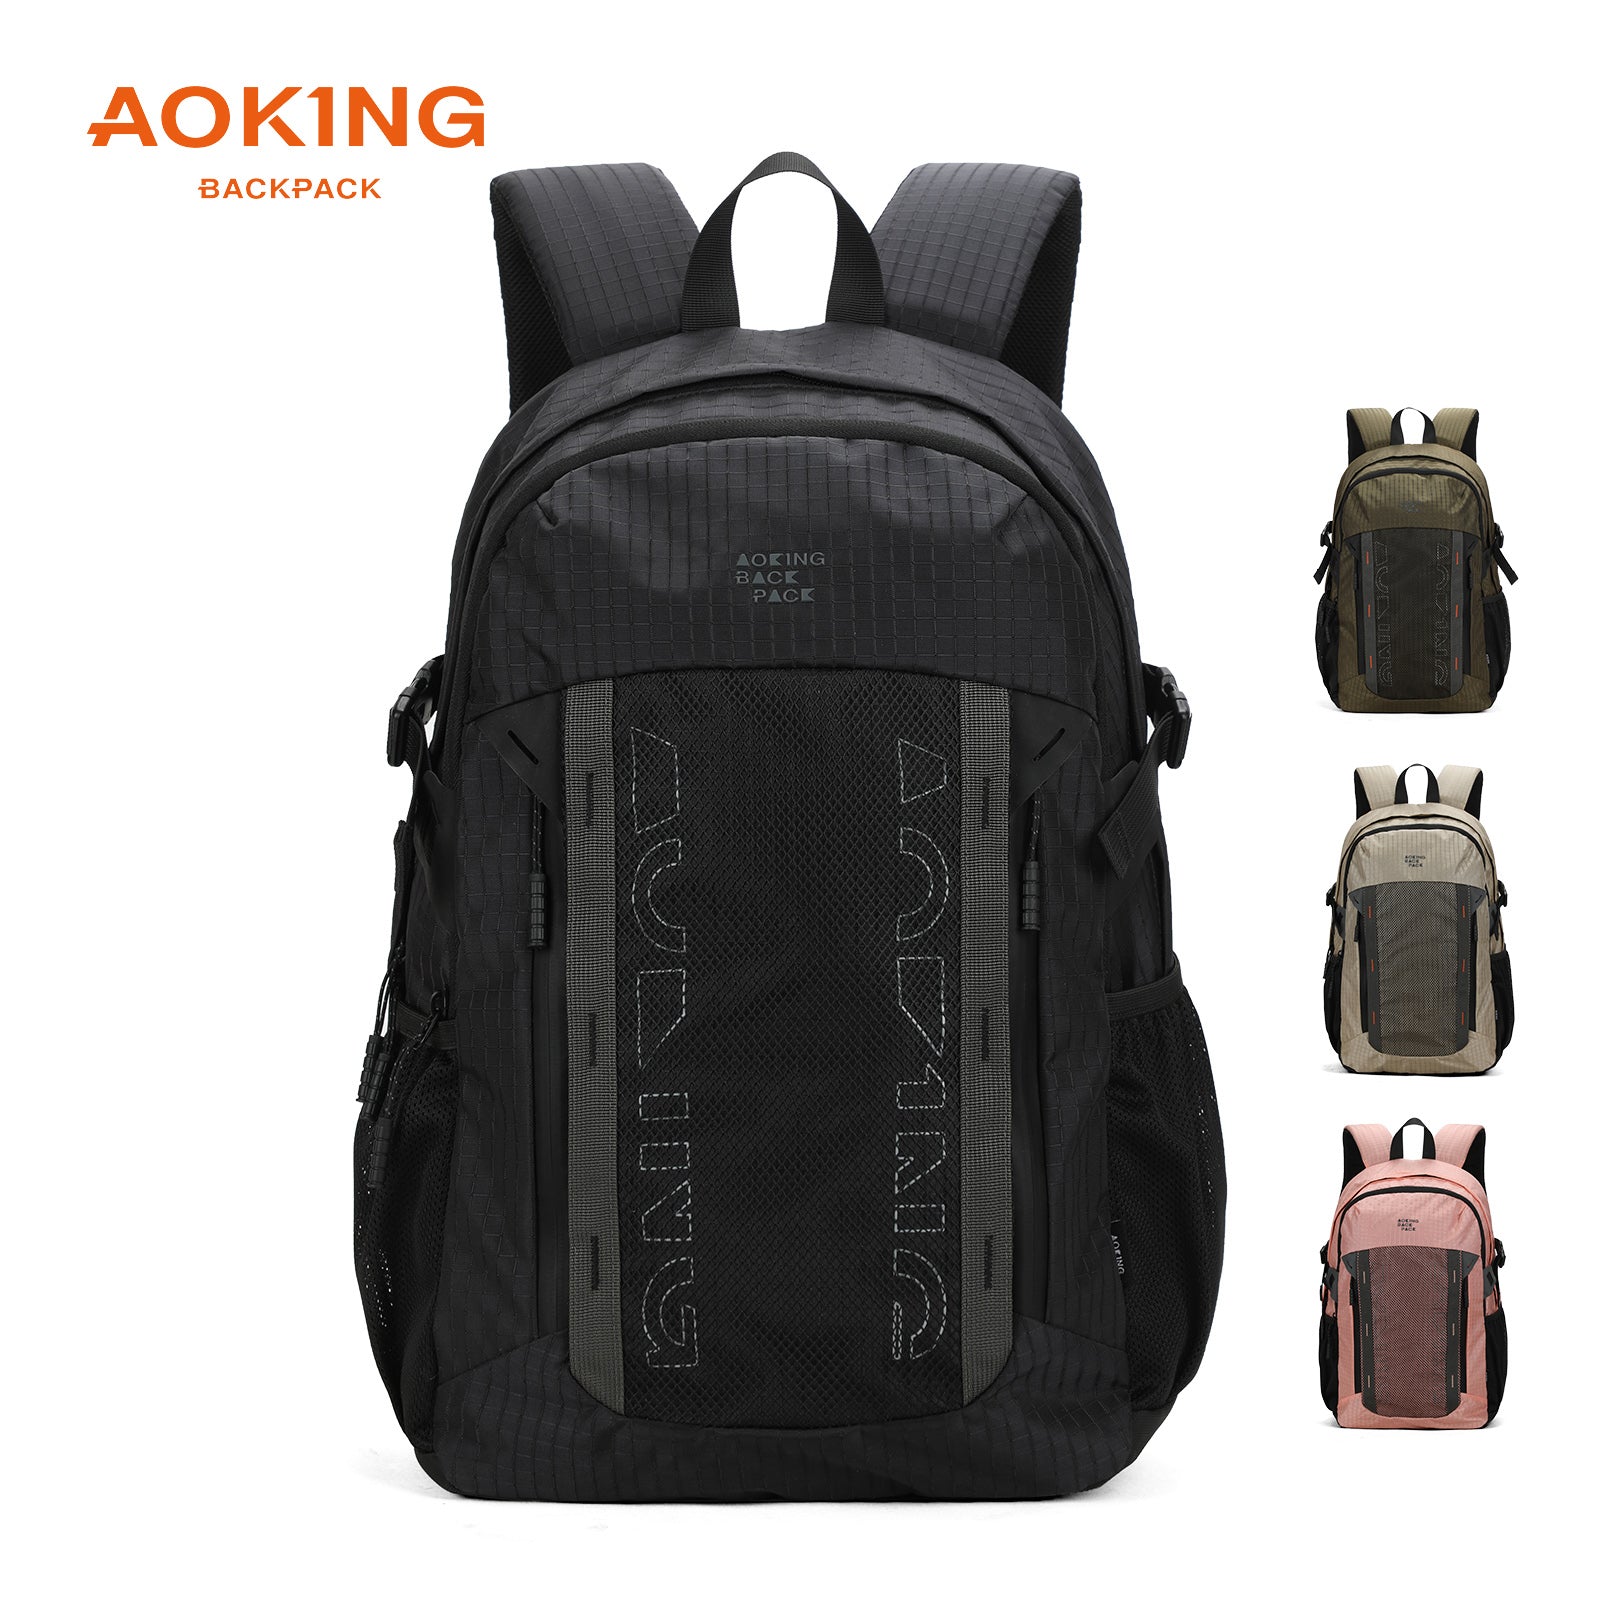 Aoking Backpack Black Casual Backpack Student Bag XN3377